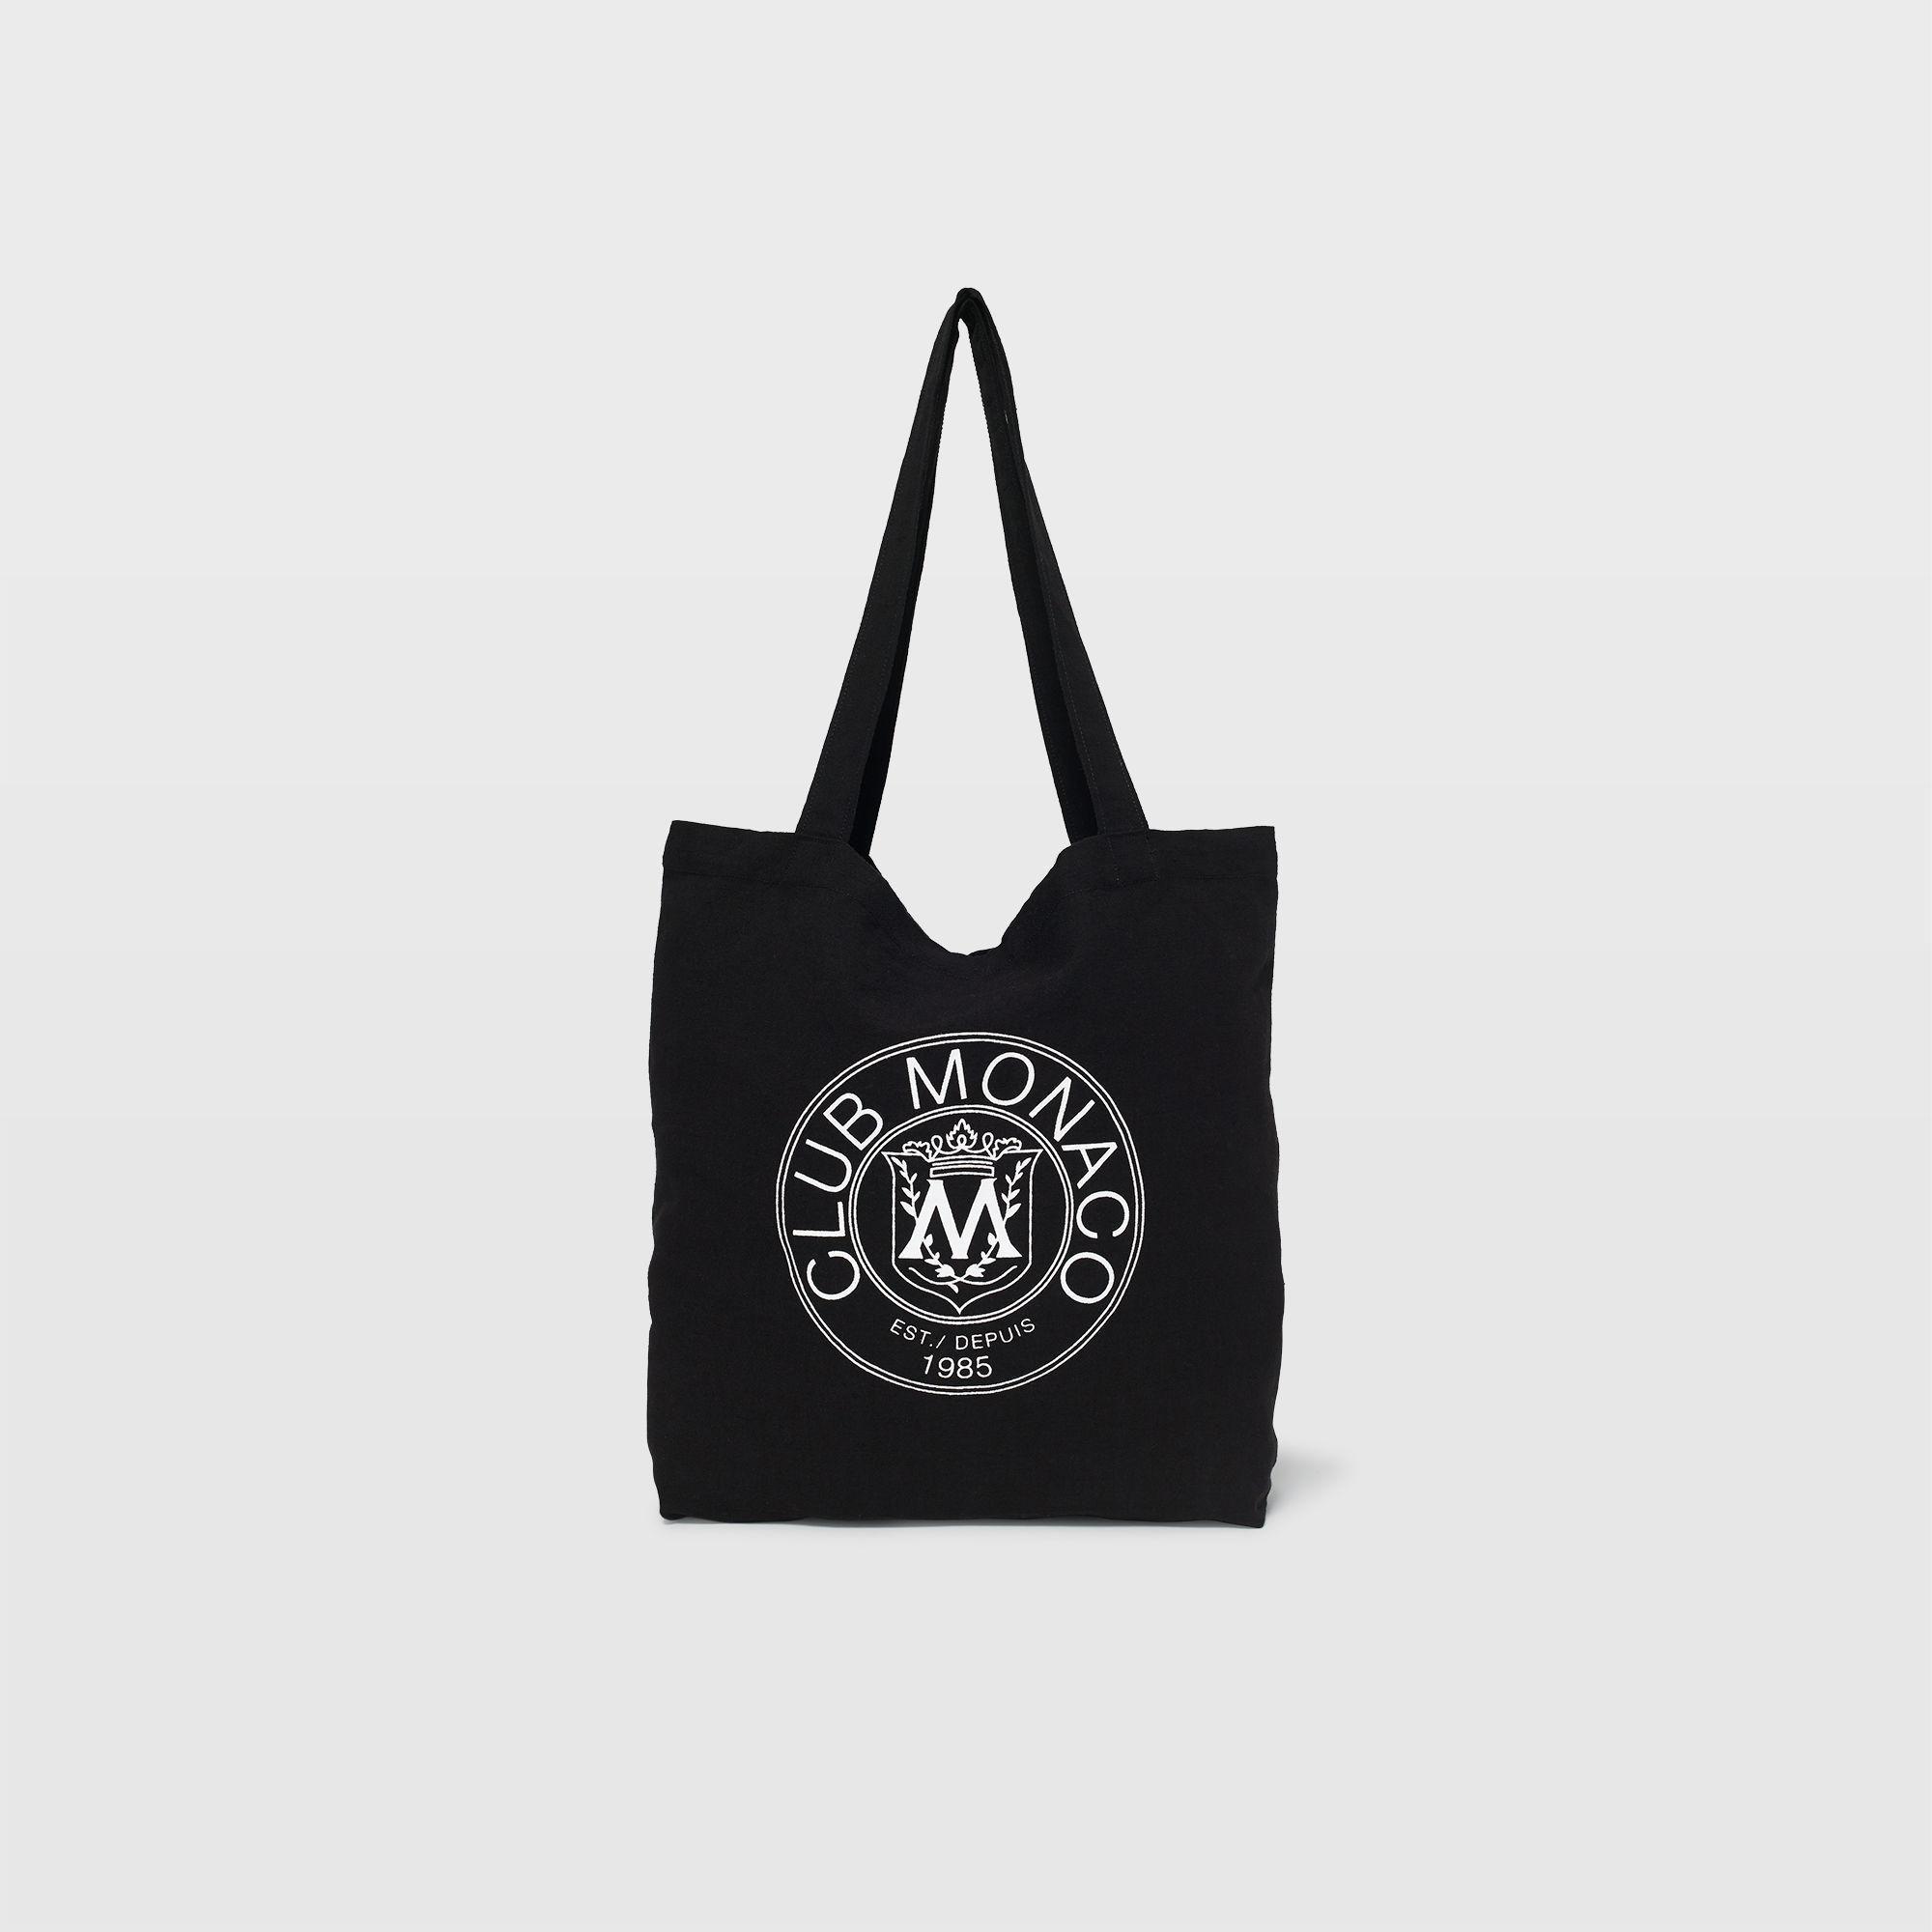 Club Monaco Logo - Club Monaco Crest Tote in Black 5.263157894736835%